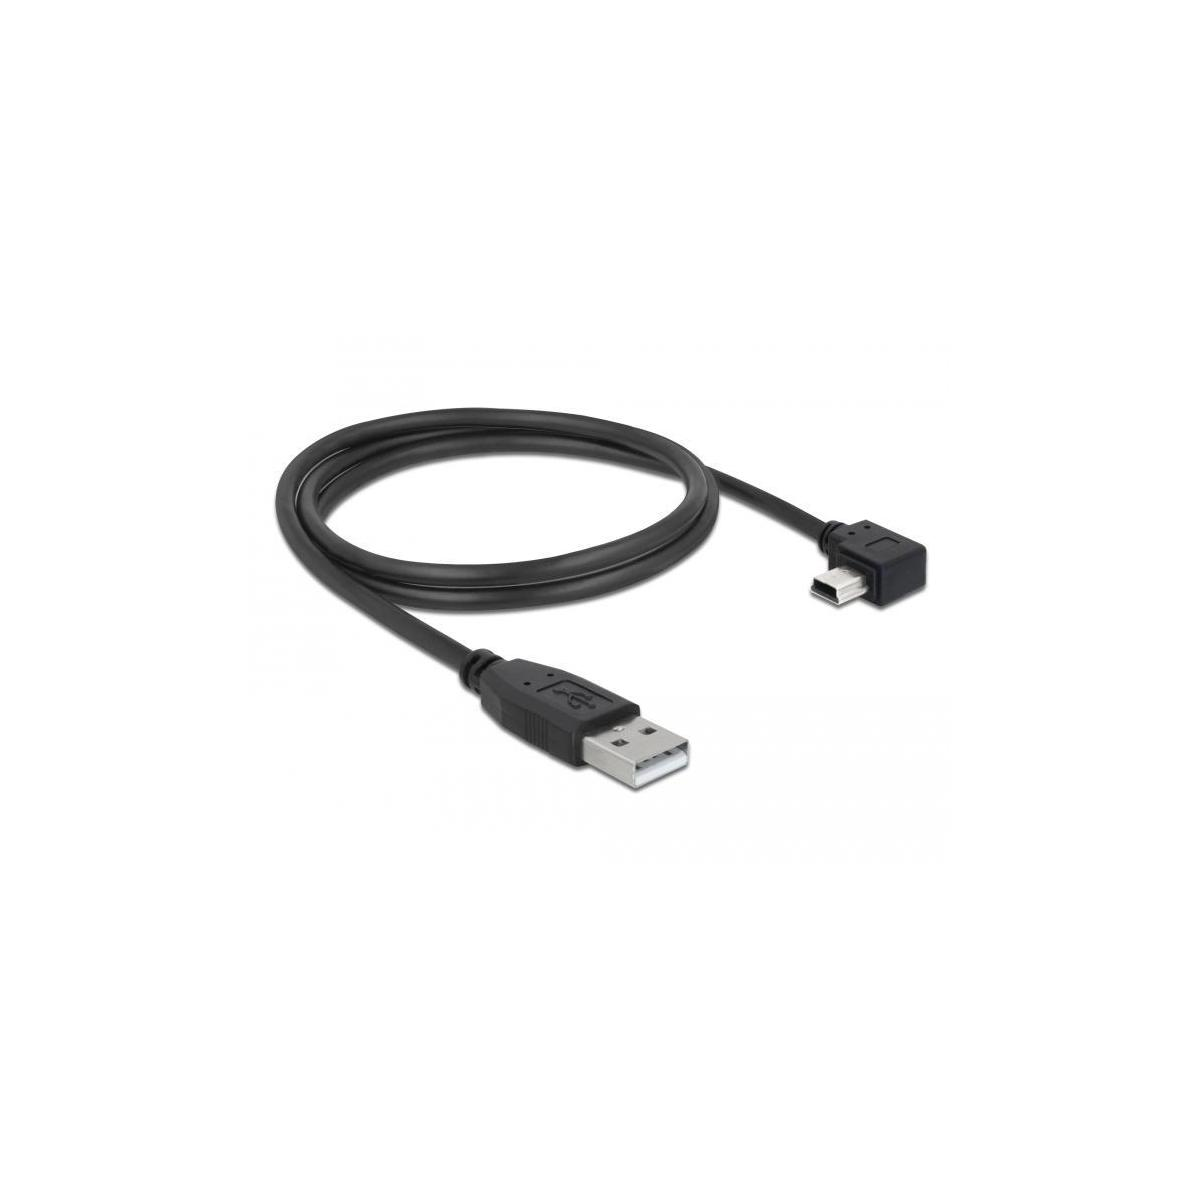 USBmini Stecker/Steckverbinder, 5pin mehrfarbig Kabel Zubehör 1m DELOCK <gt/> 2.0-A DELOCK Peripheriegeräte USB &